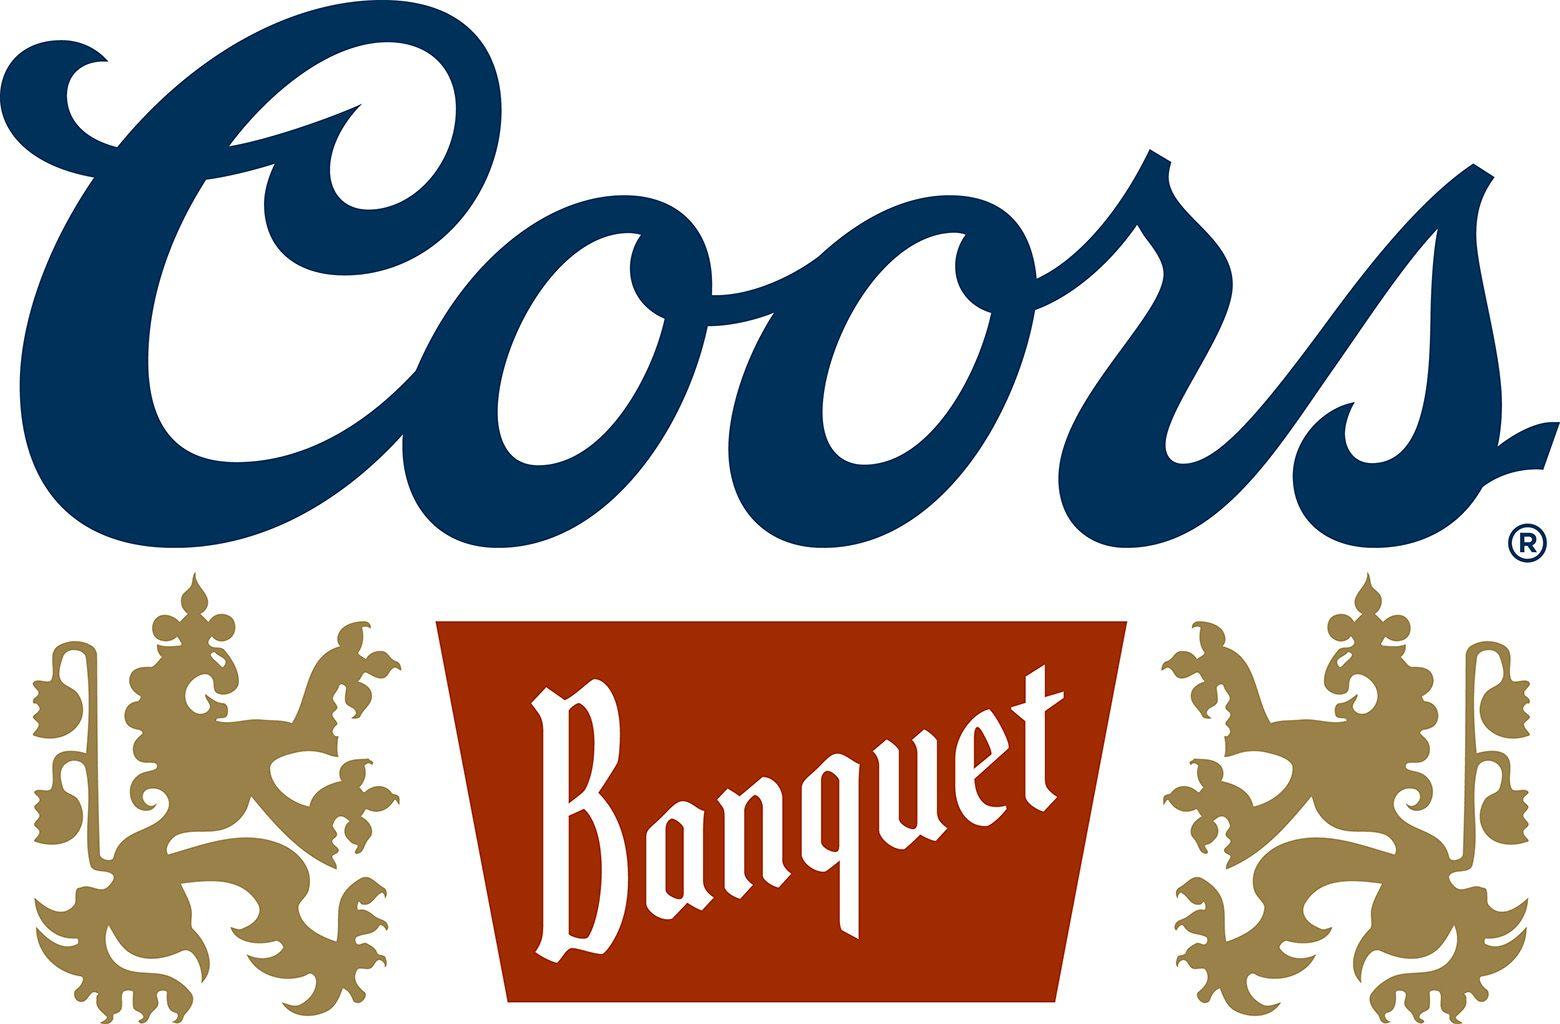 Coors Original Logo - Coors banquet beer Logos